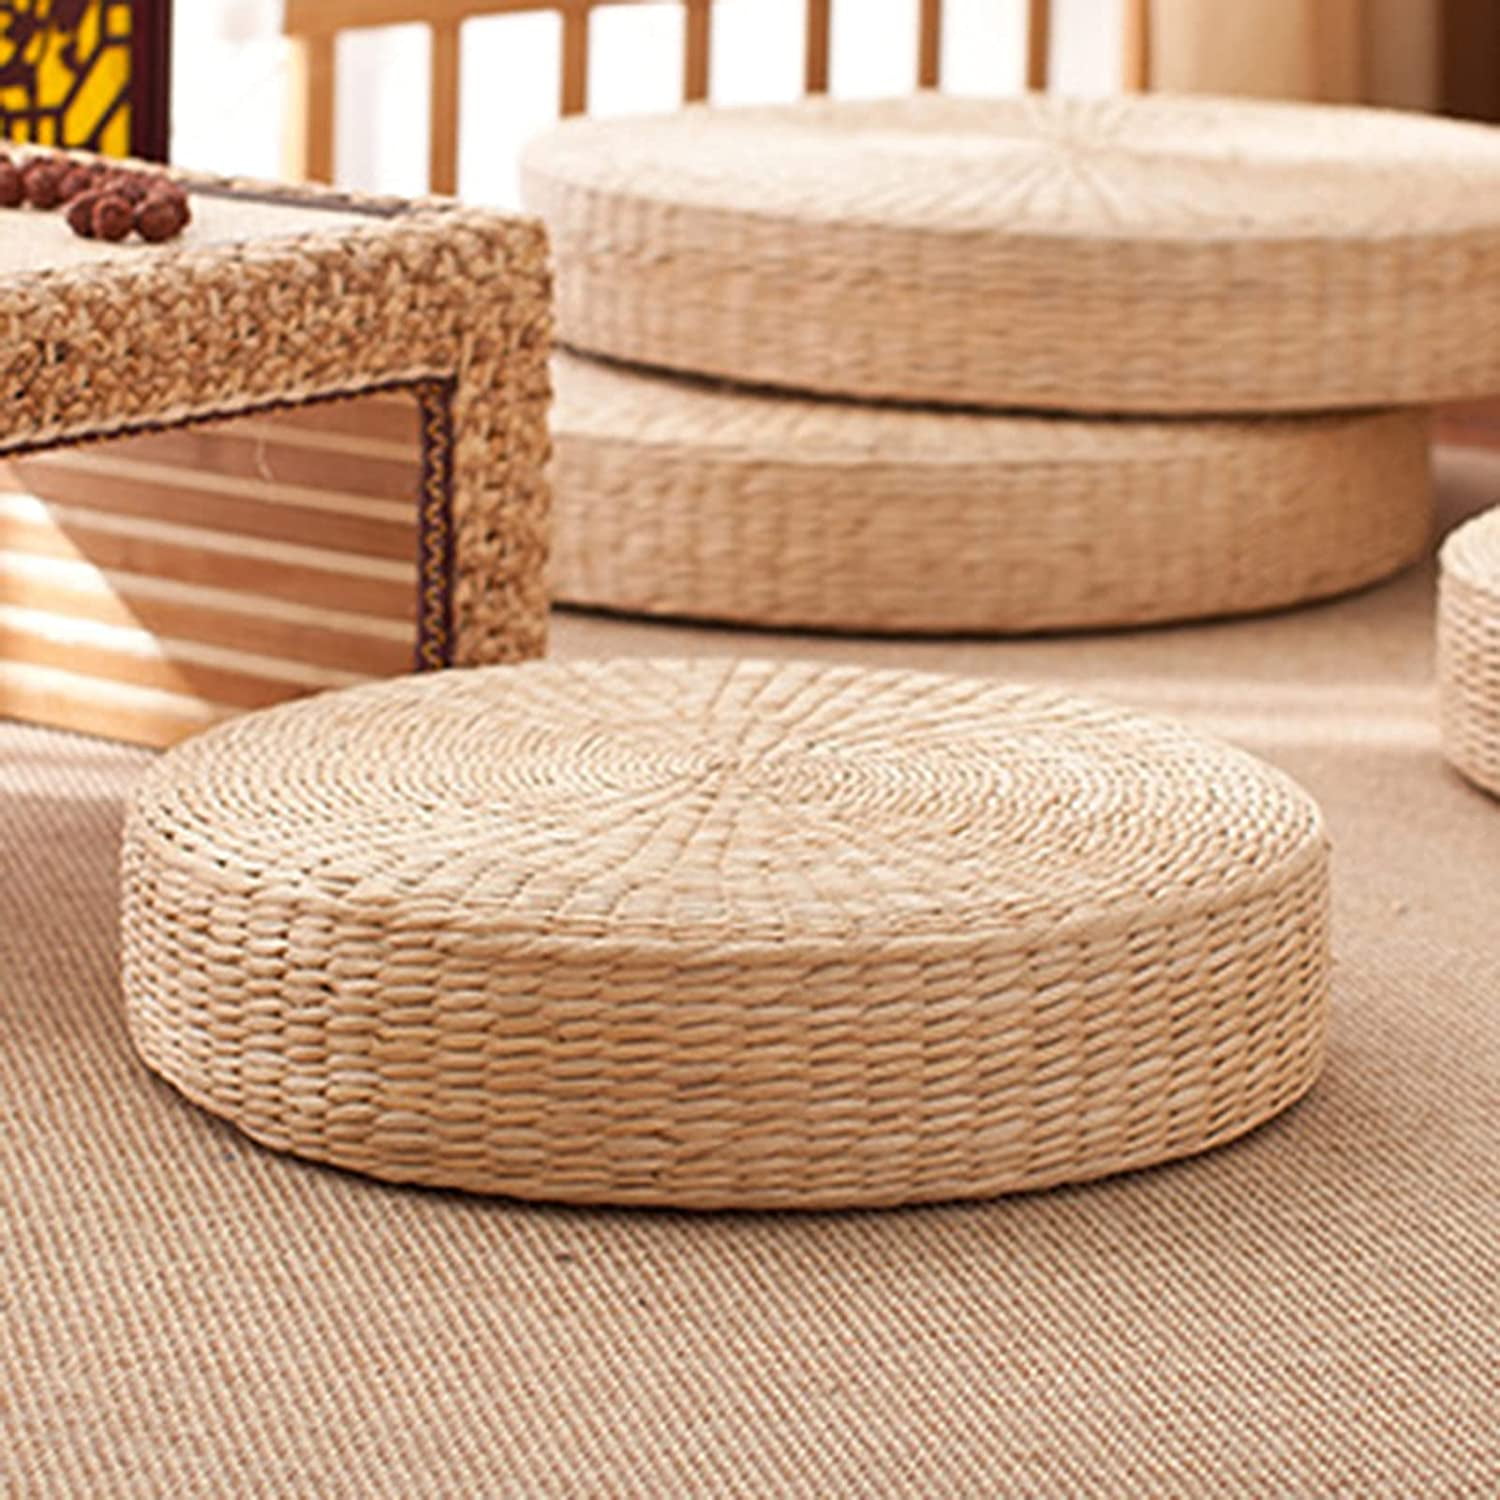 40cm Natural Woven Grass Cushion - Wild Pucao Pillow Floor Mat - Round Braided Pad - Handmade Straw Woven Rush Yoga Mat - Flat Seat Cushion for Garden